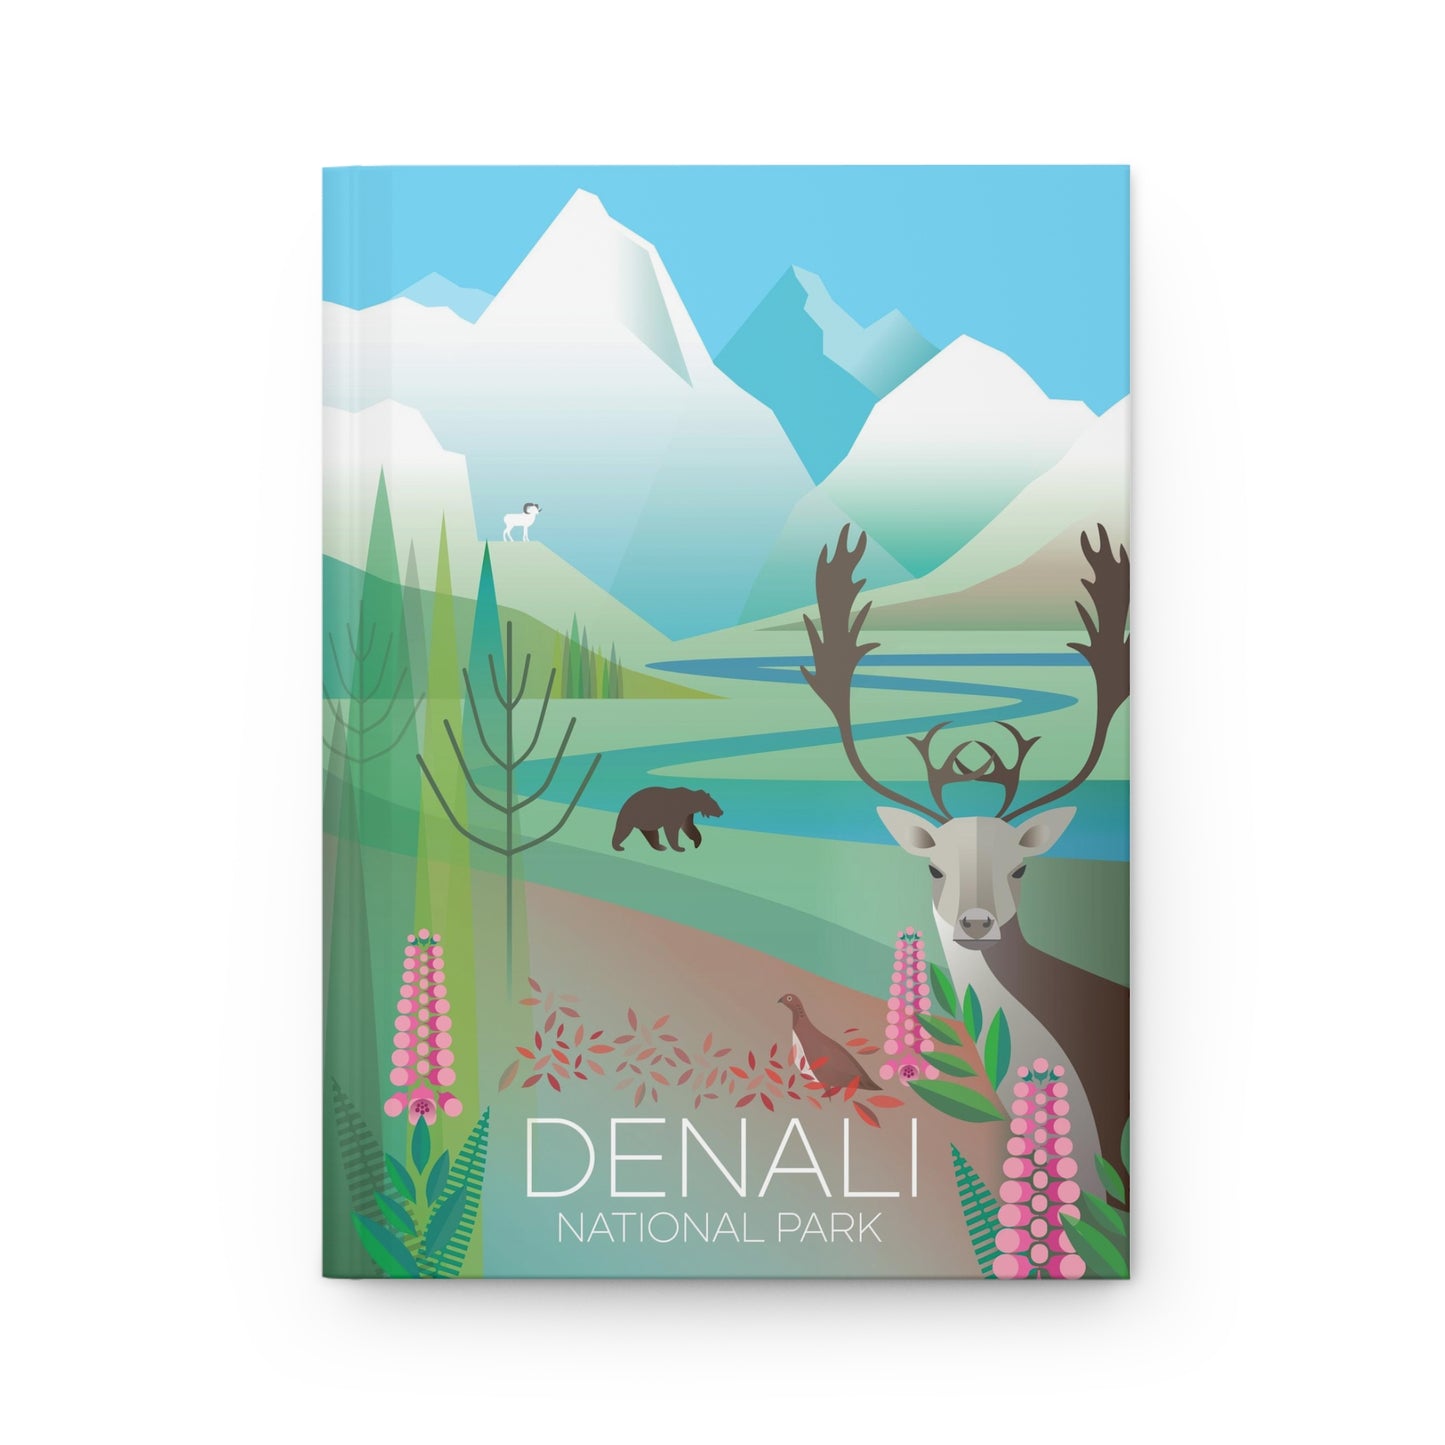 Denali National Park Hardcover Journal